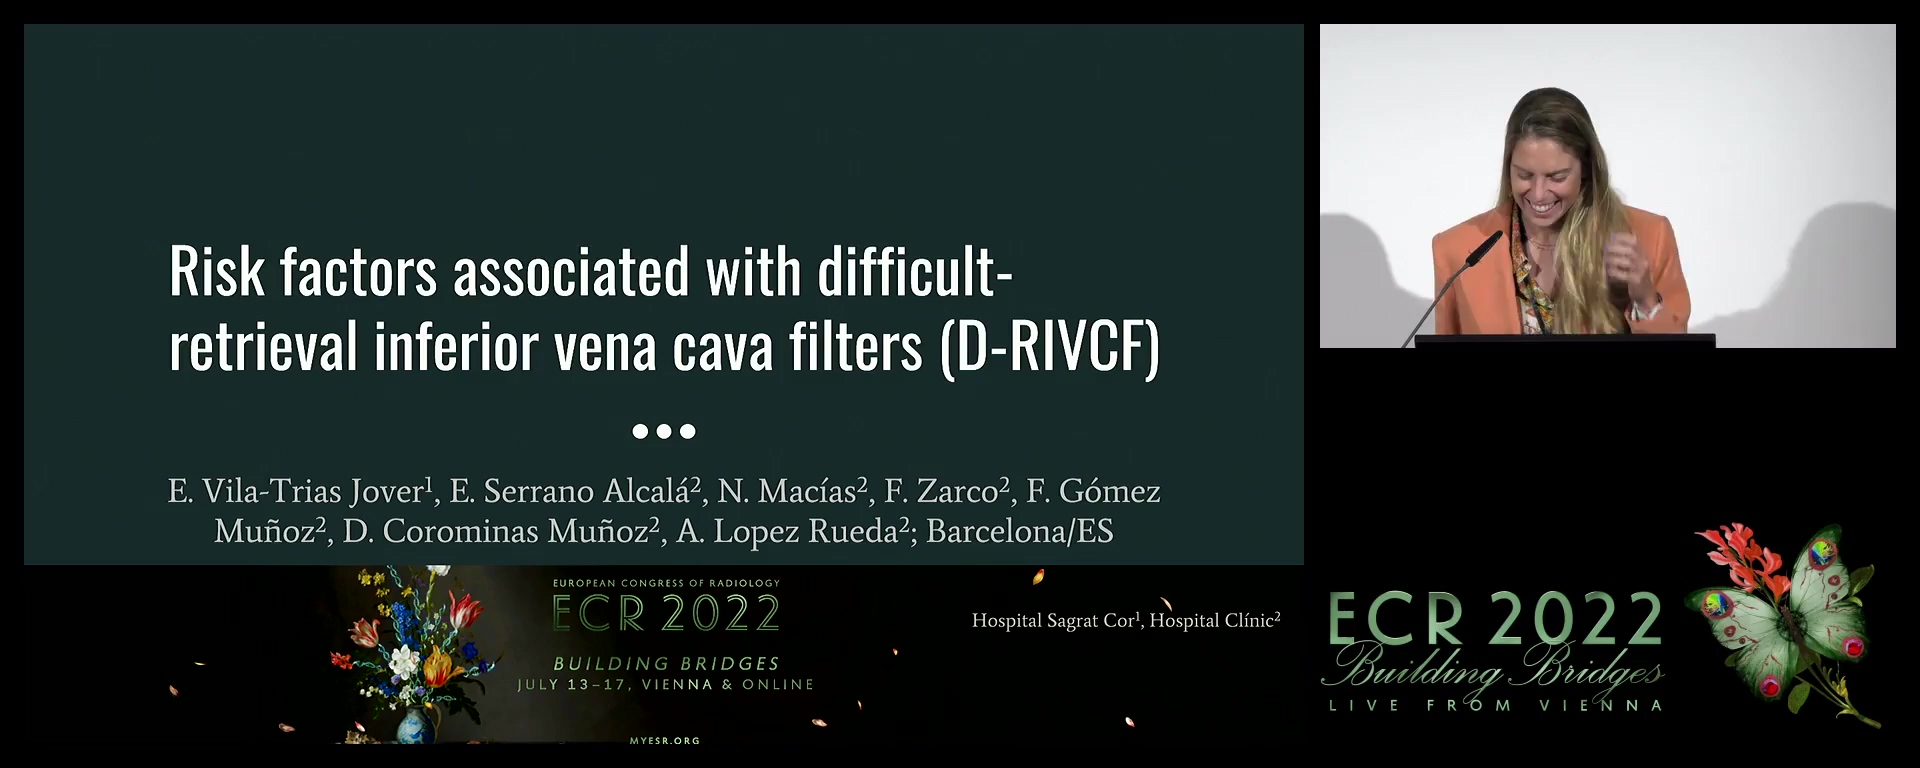 Risk factors associated with difficult-retrieval inferior vena cava filters (D-RIVCF) - Elisabet Vila-Trias Jover, Barcelona / ES